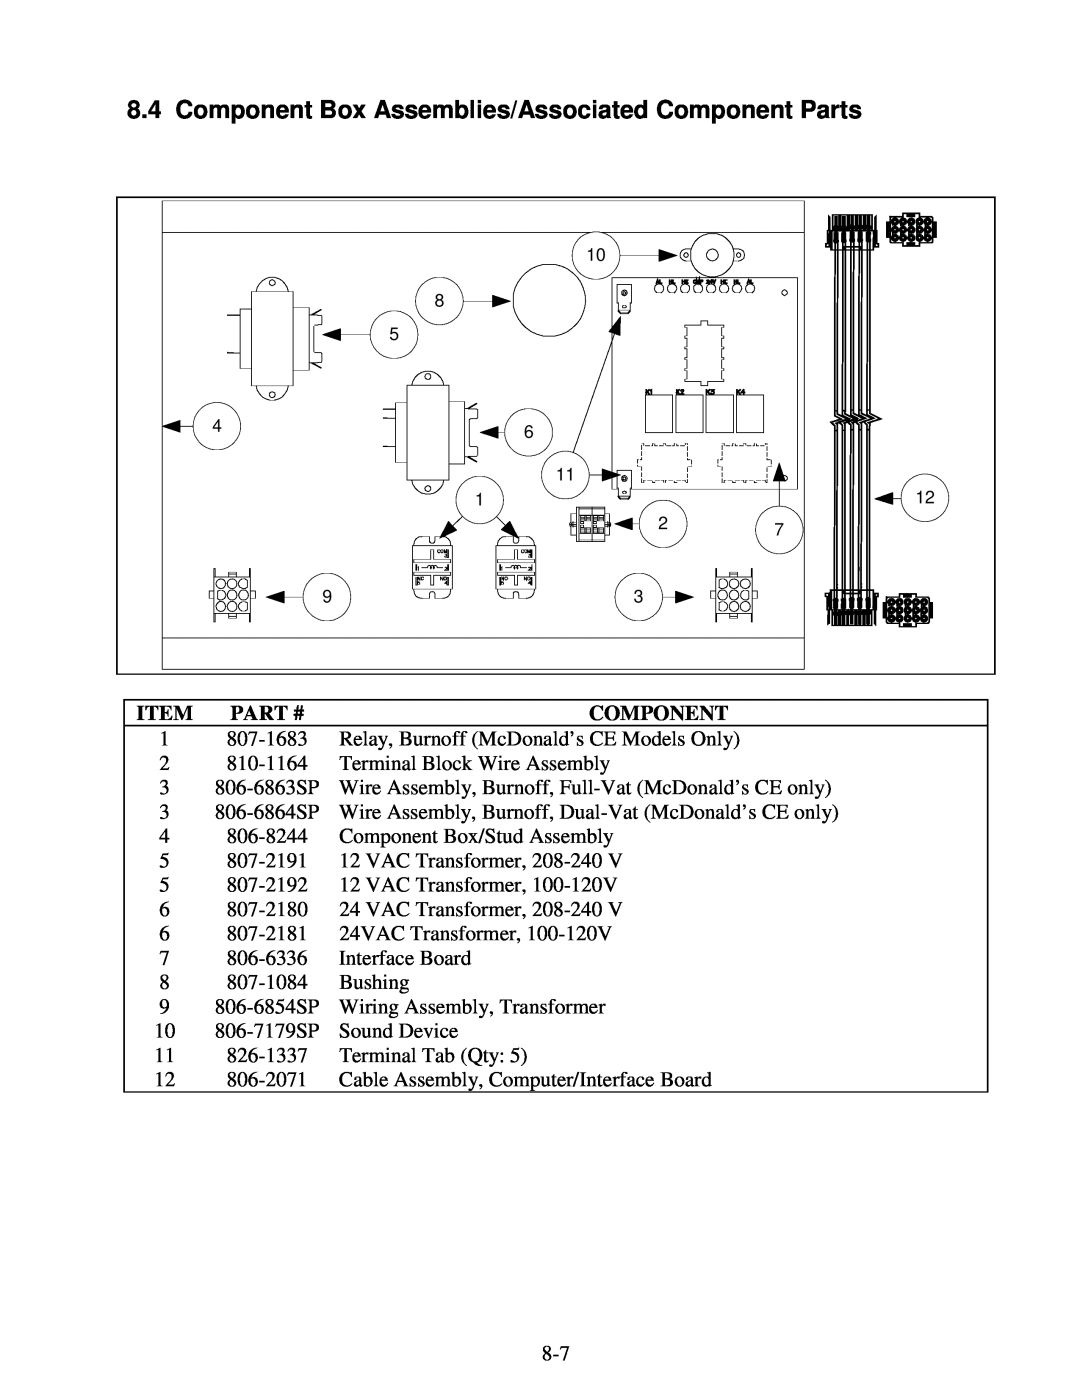 Frymaster H14 Series service manual Component Box Assemblies/Associated Component Parts, Part # 